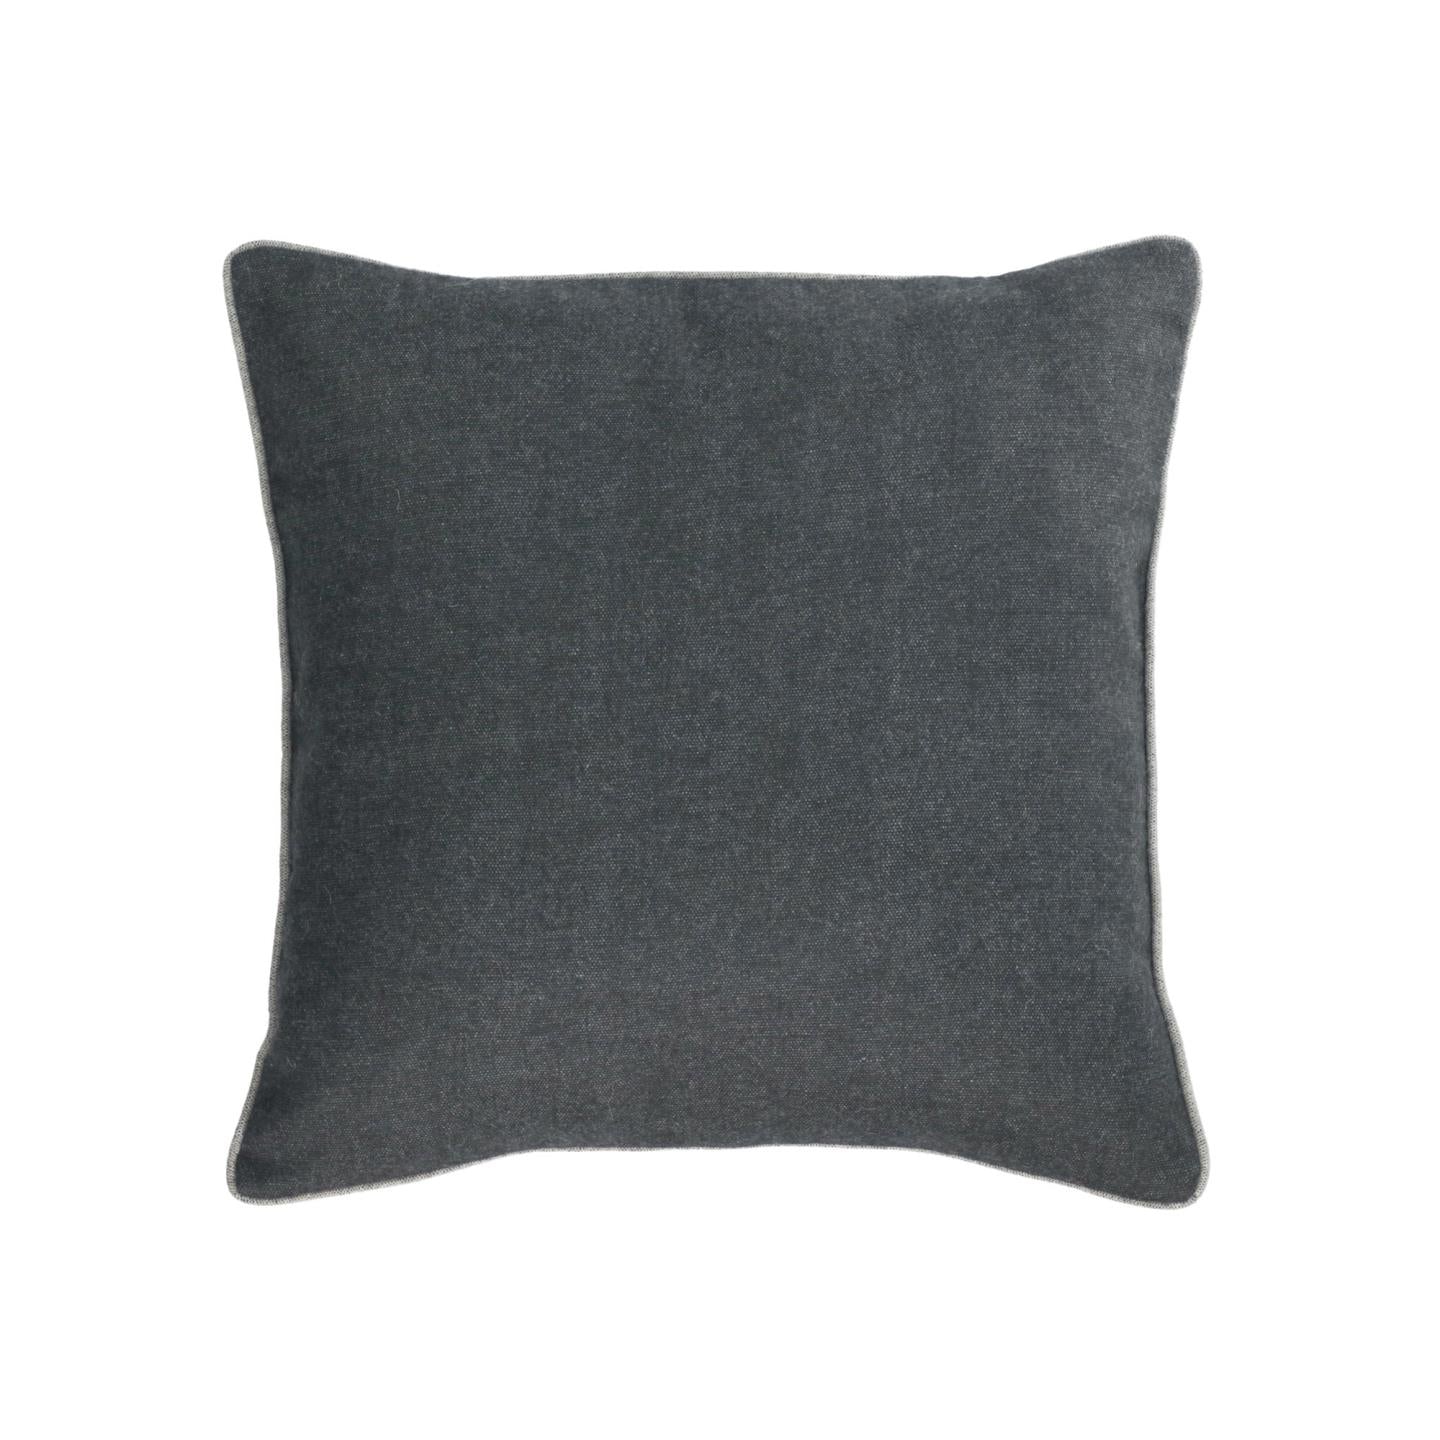 Alcara black cushion cover with grey border 45 x 45 cm